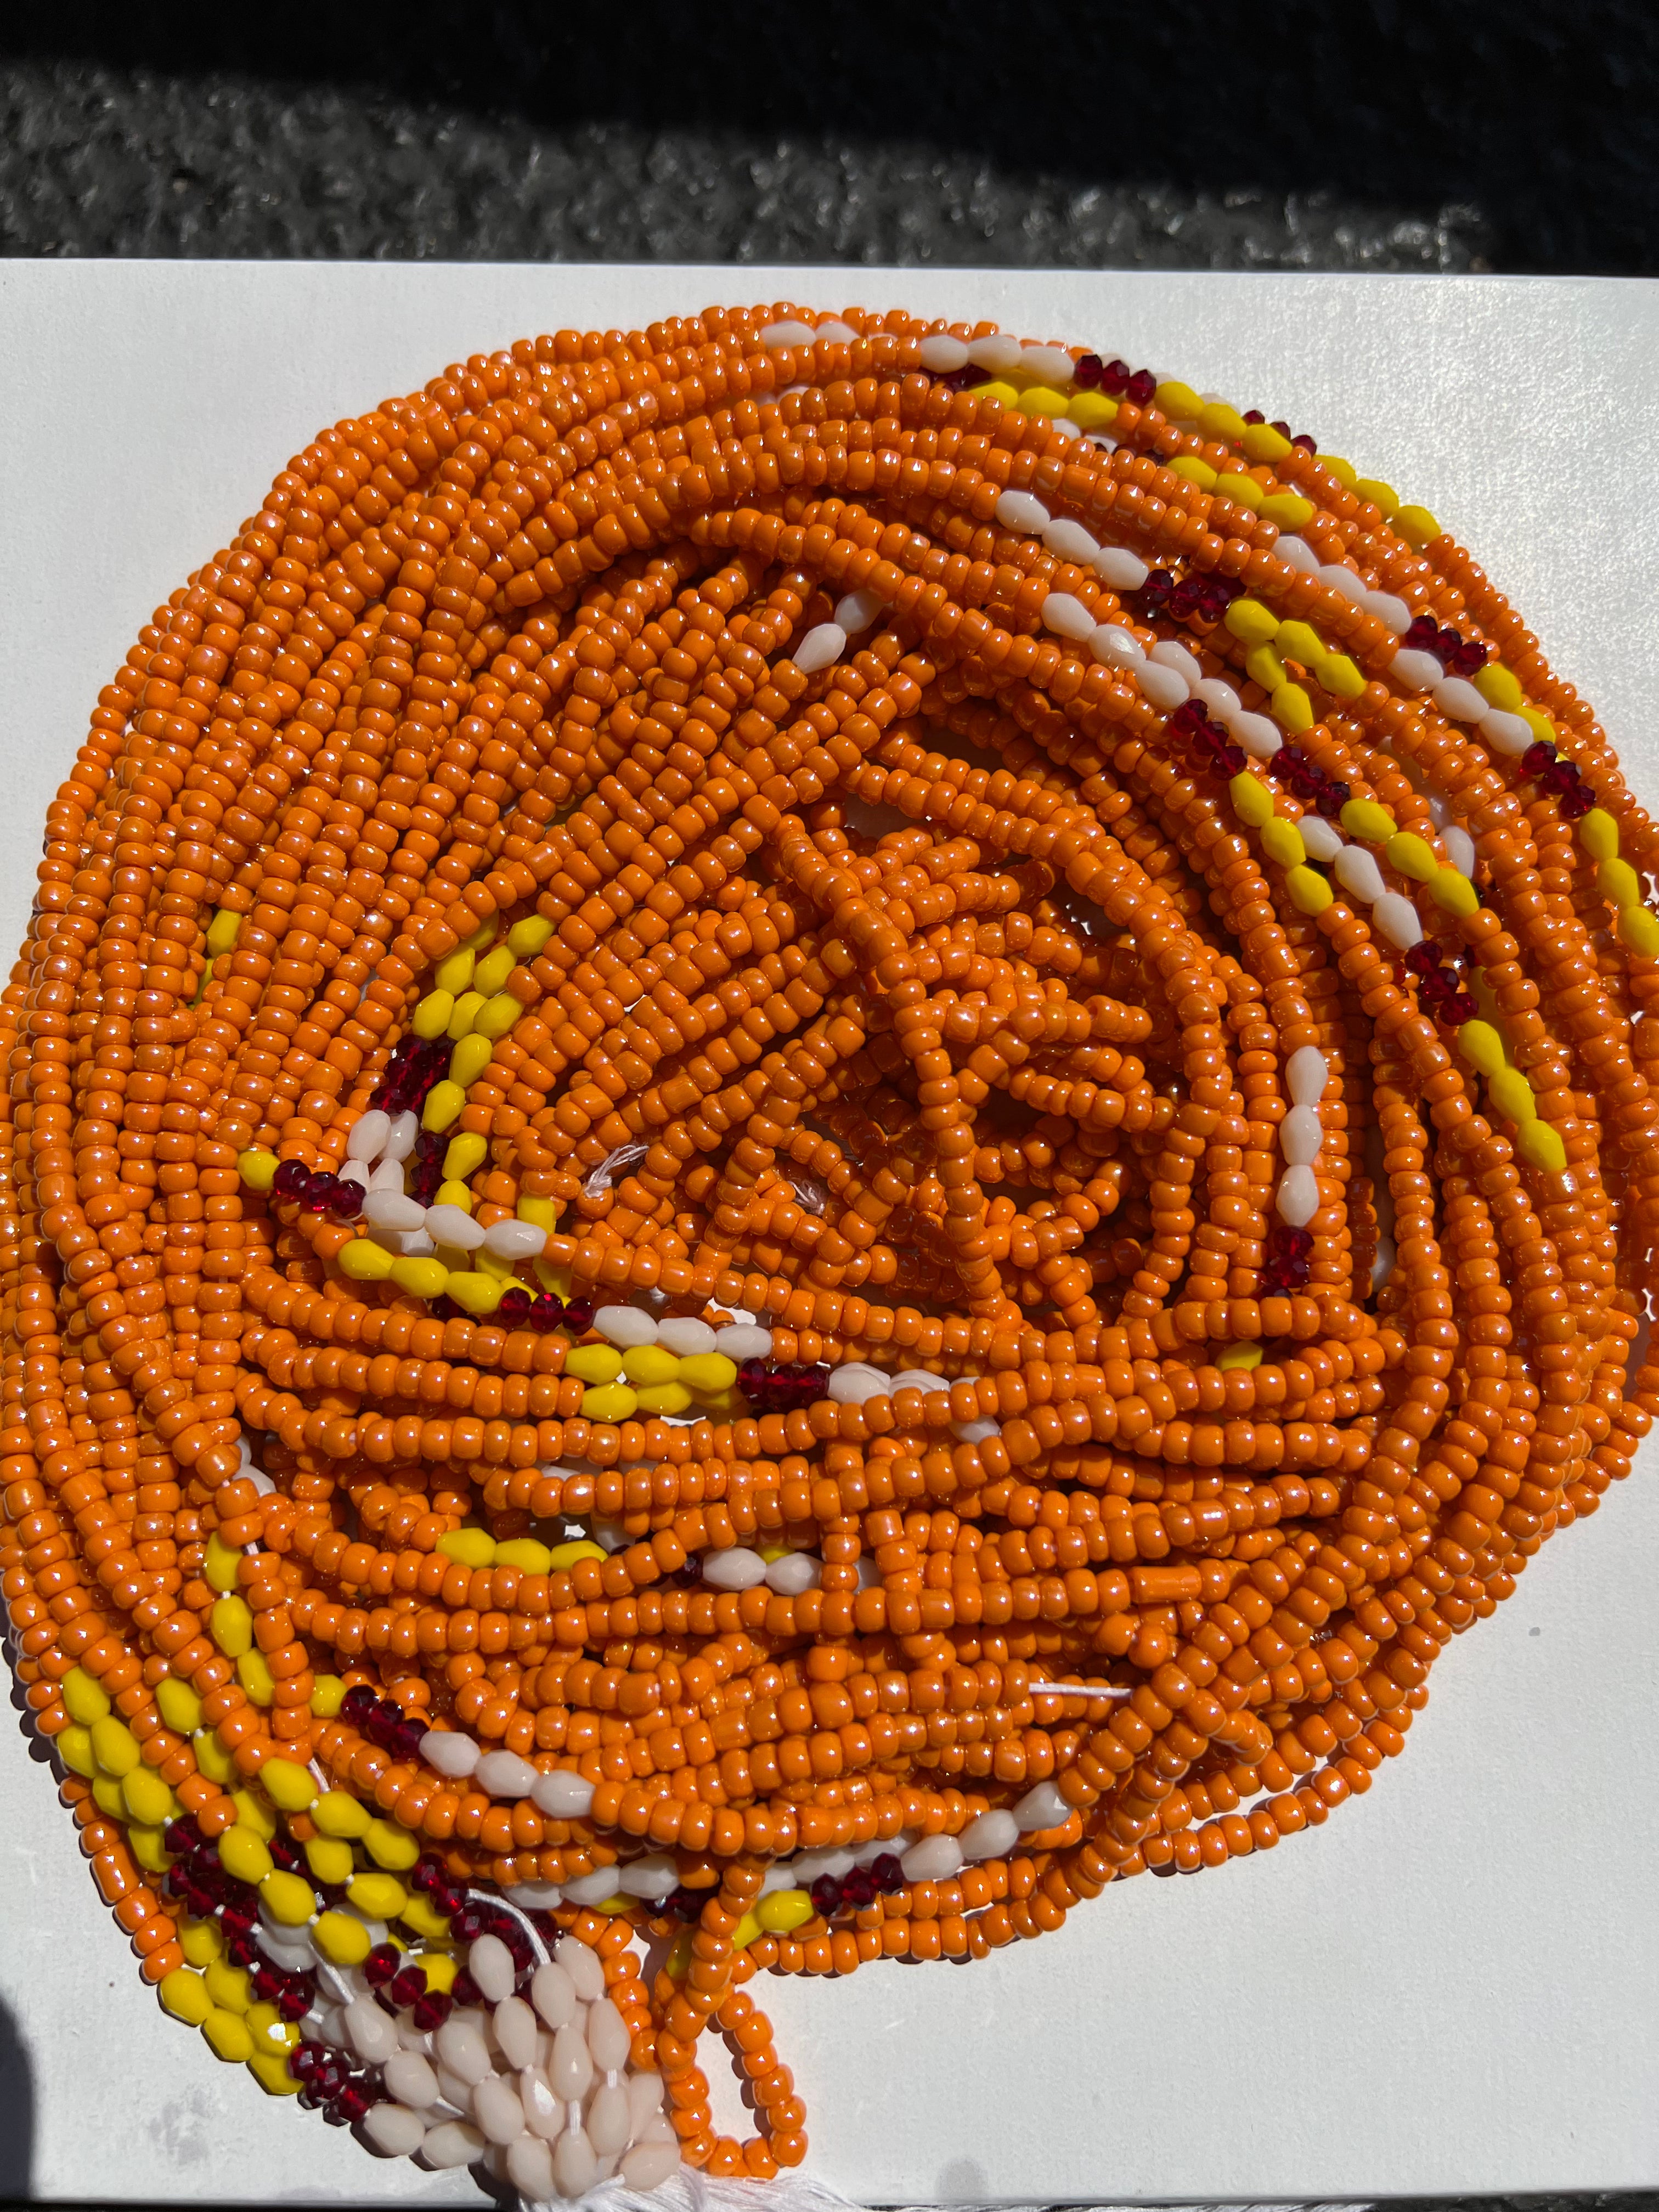 Georgia Peach waist beads with crystals - Tie on  waist beads - 47 inches